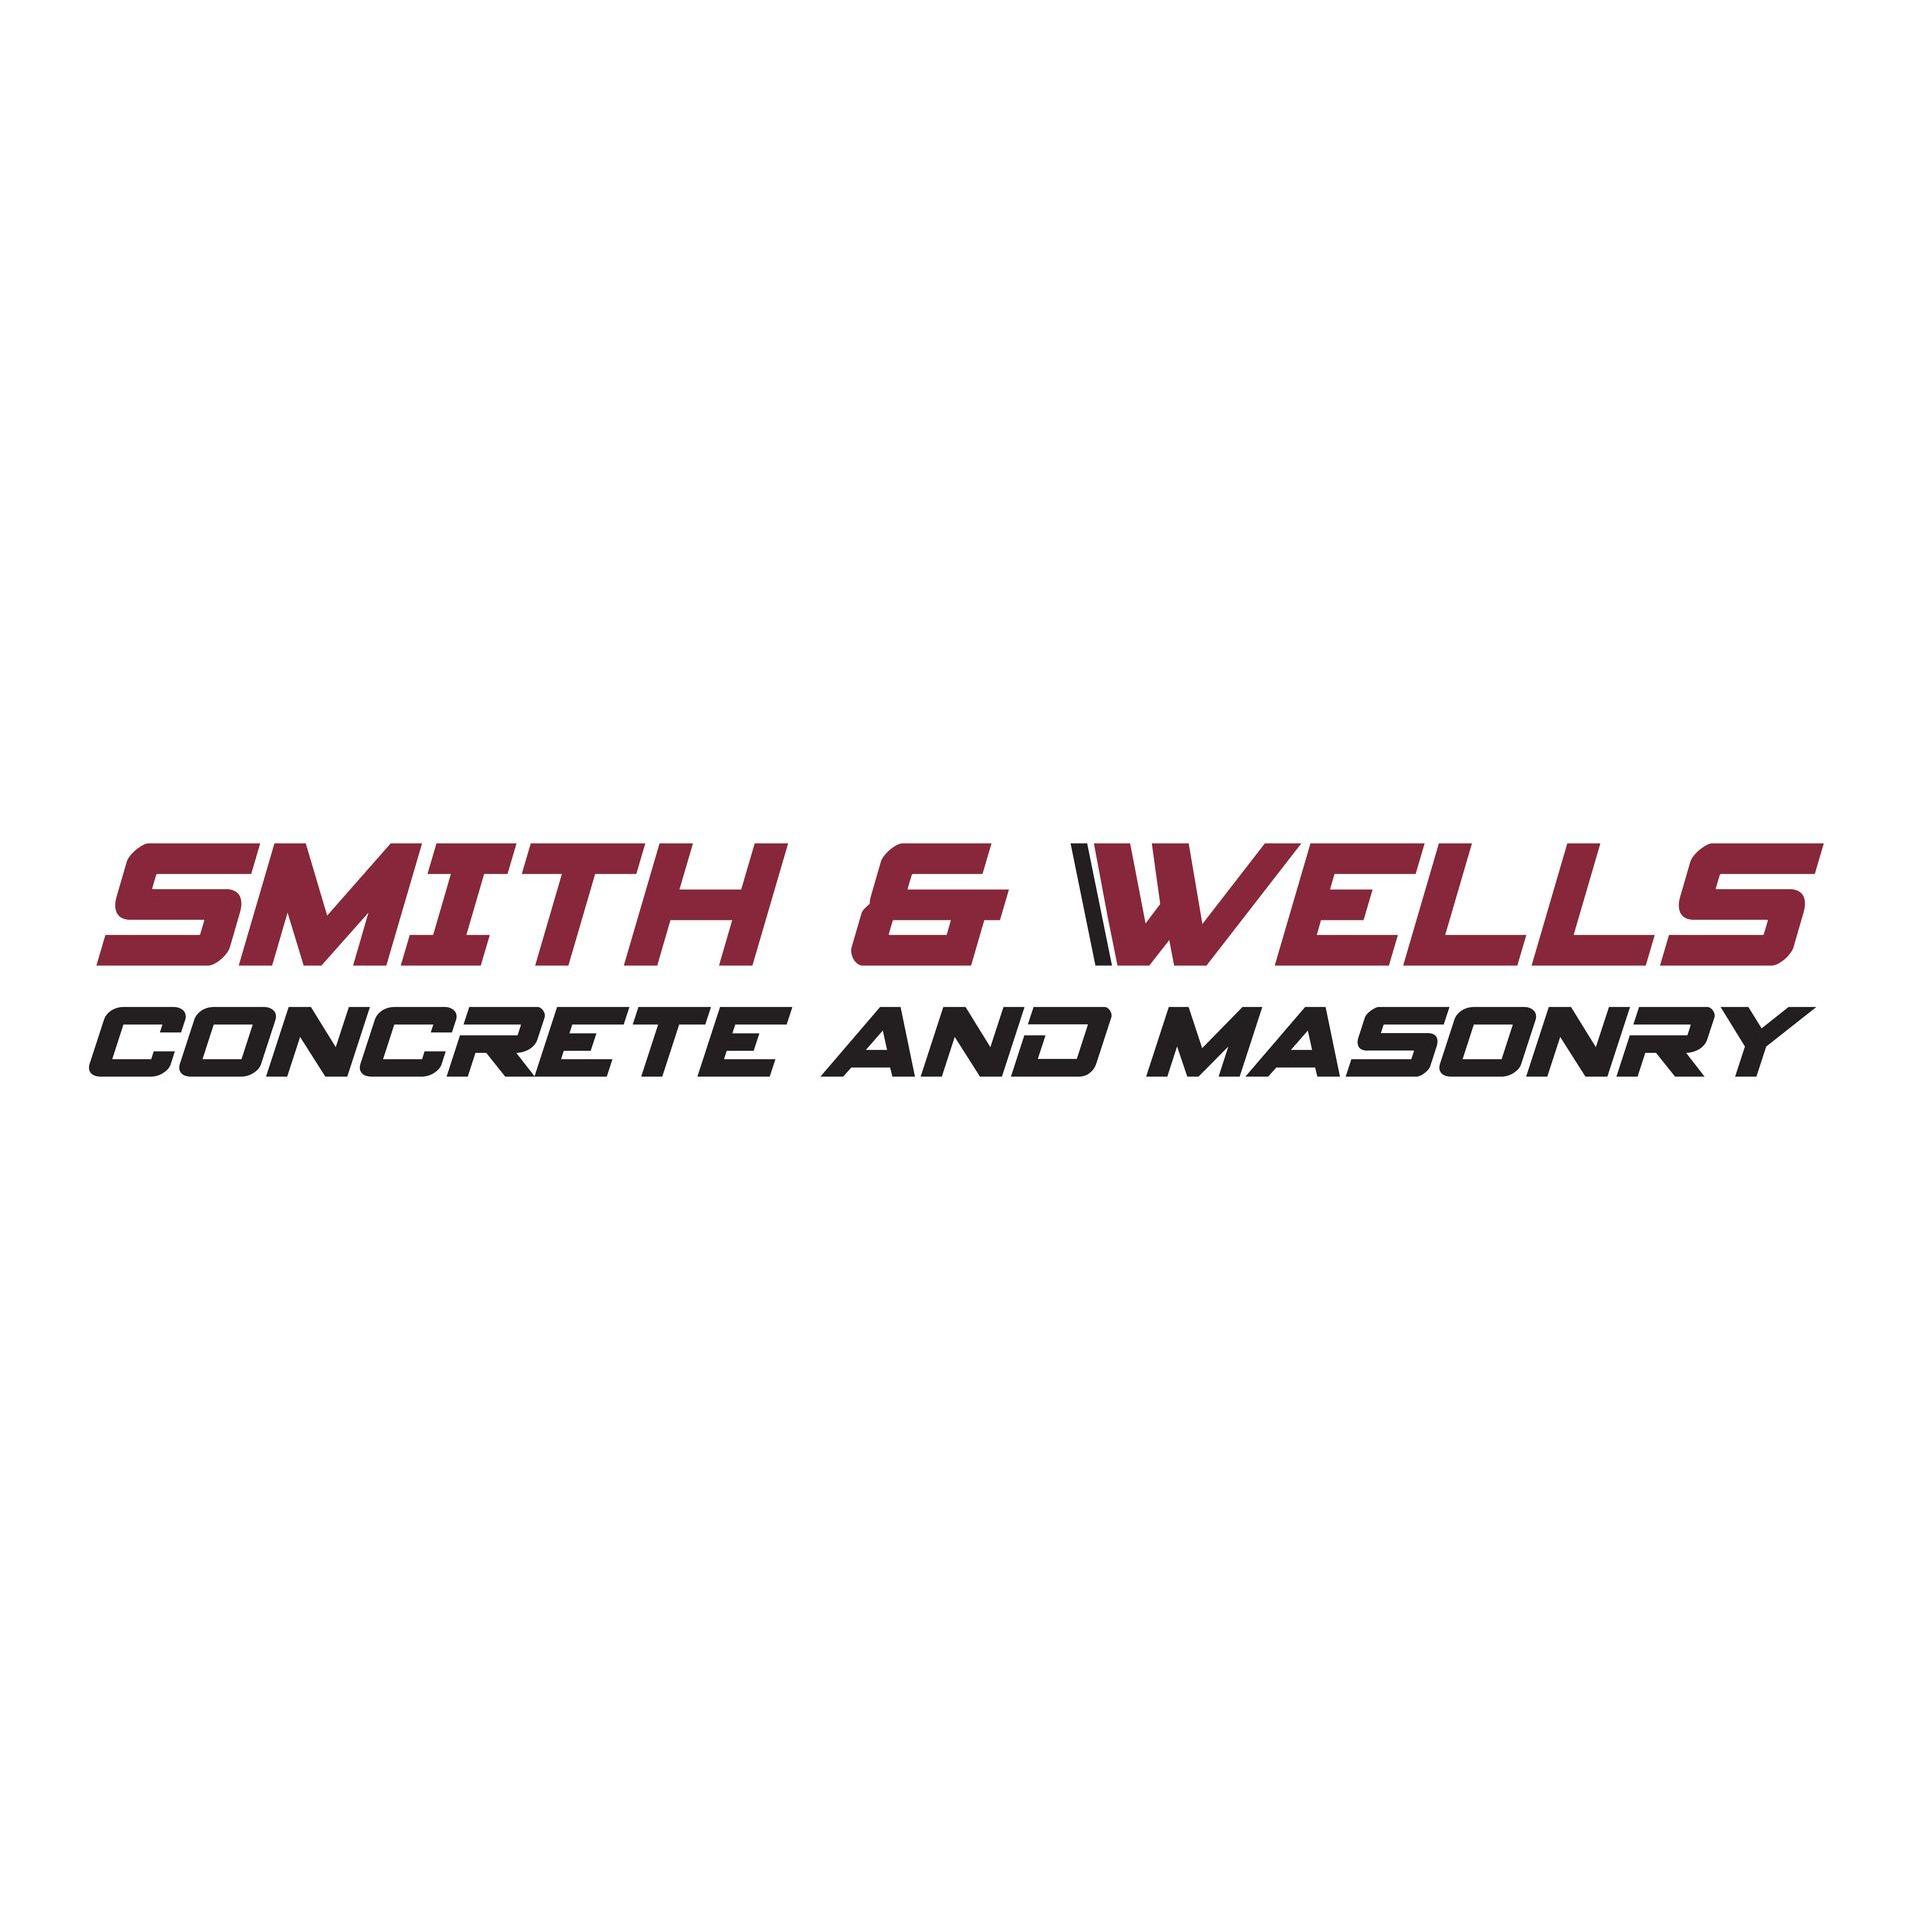 Smith & Wells Concrete and Masonry - Eau Claire, WI 54701 - (715)379-0910 | ShowMeLocal.com